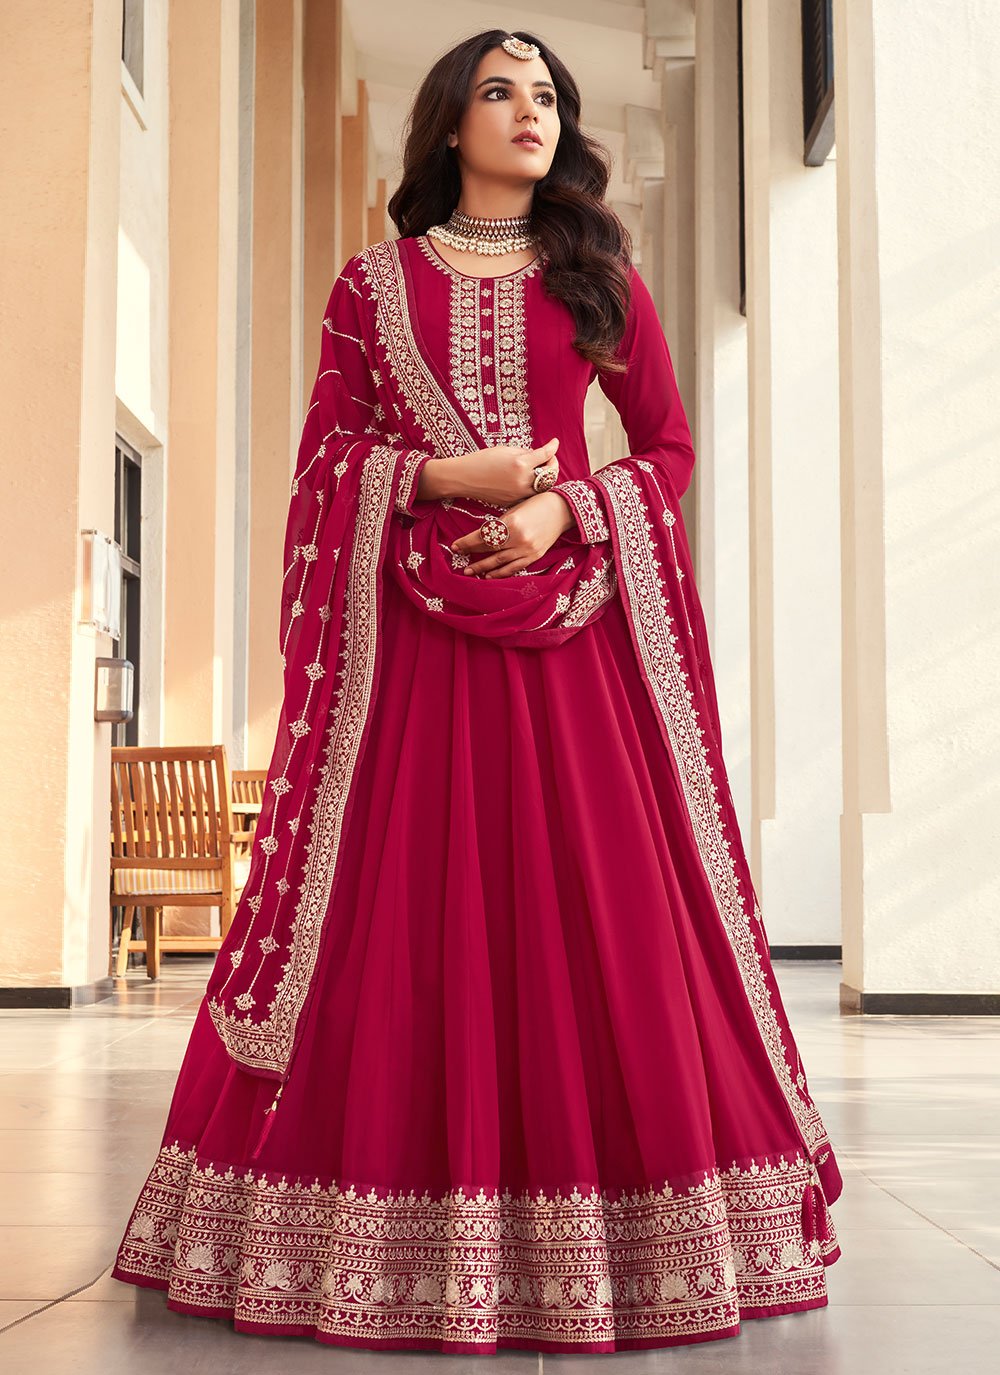  Jasmin Bhasin Embroidered Hot Pink Floor Length Salwar Suit